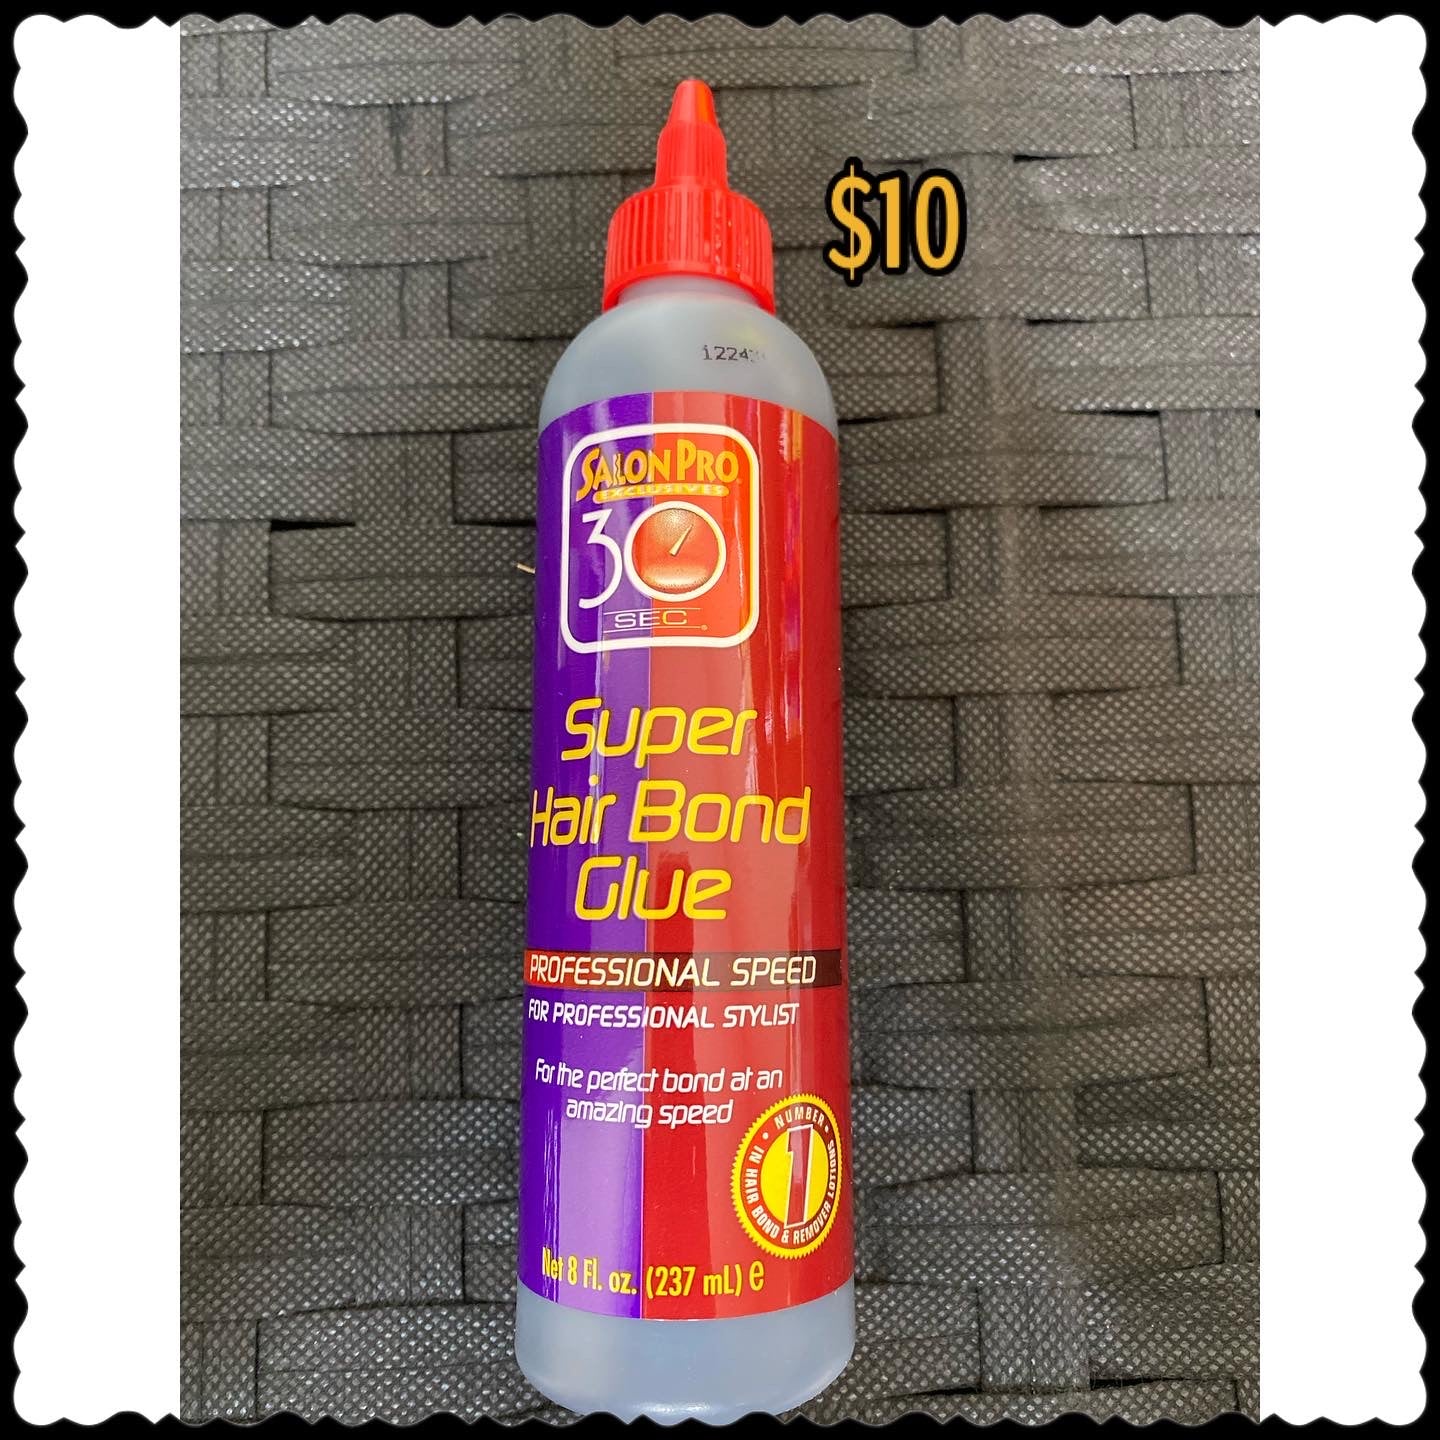 Salon Pro 30 Sec Super Hair Bond Glue 8 FL OZ